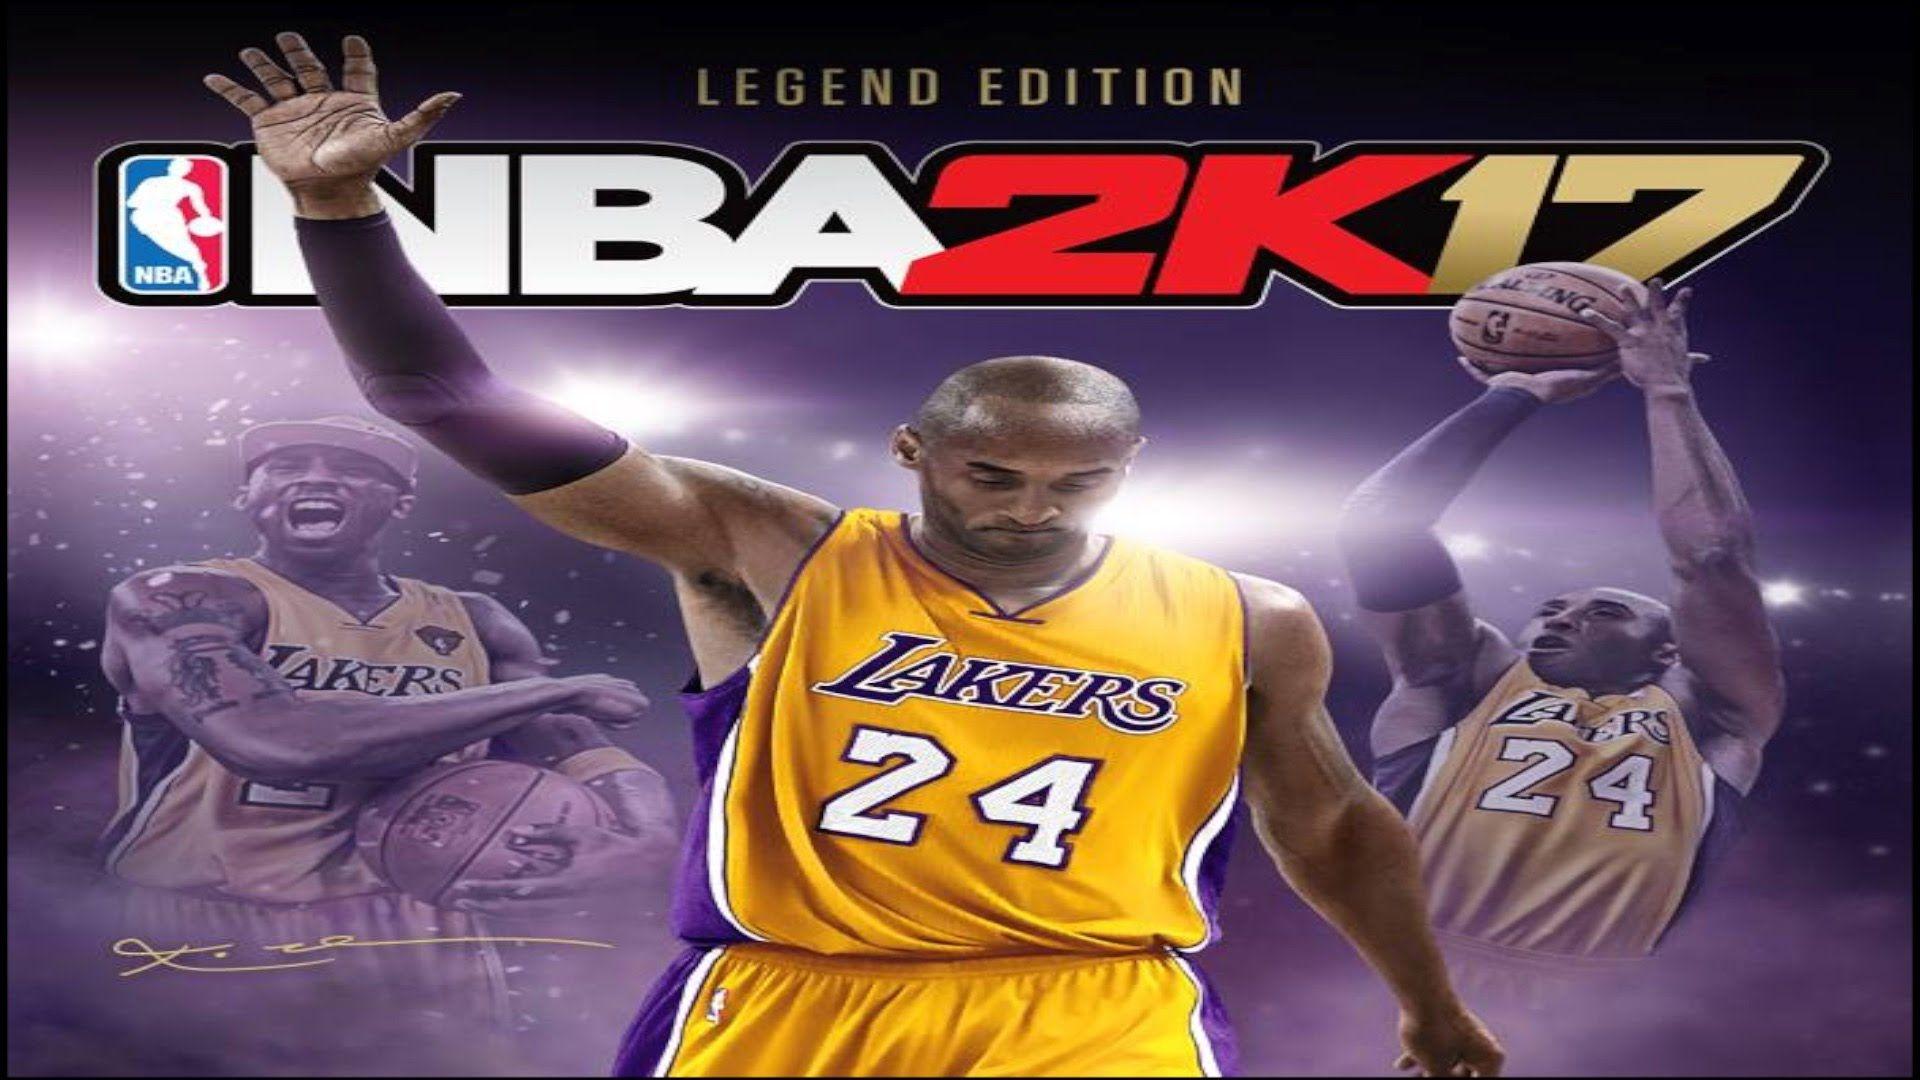 NBA 2K17 Legend Edition Feat. Kobe Bryant